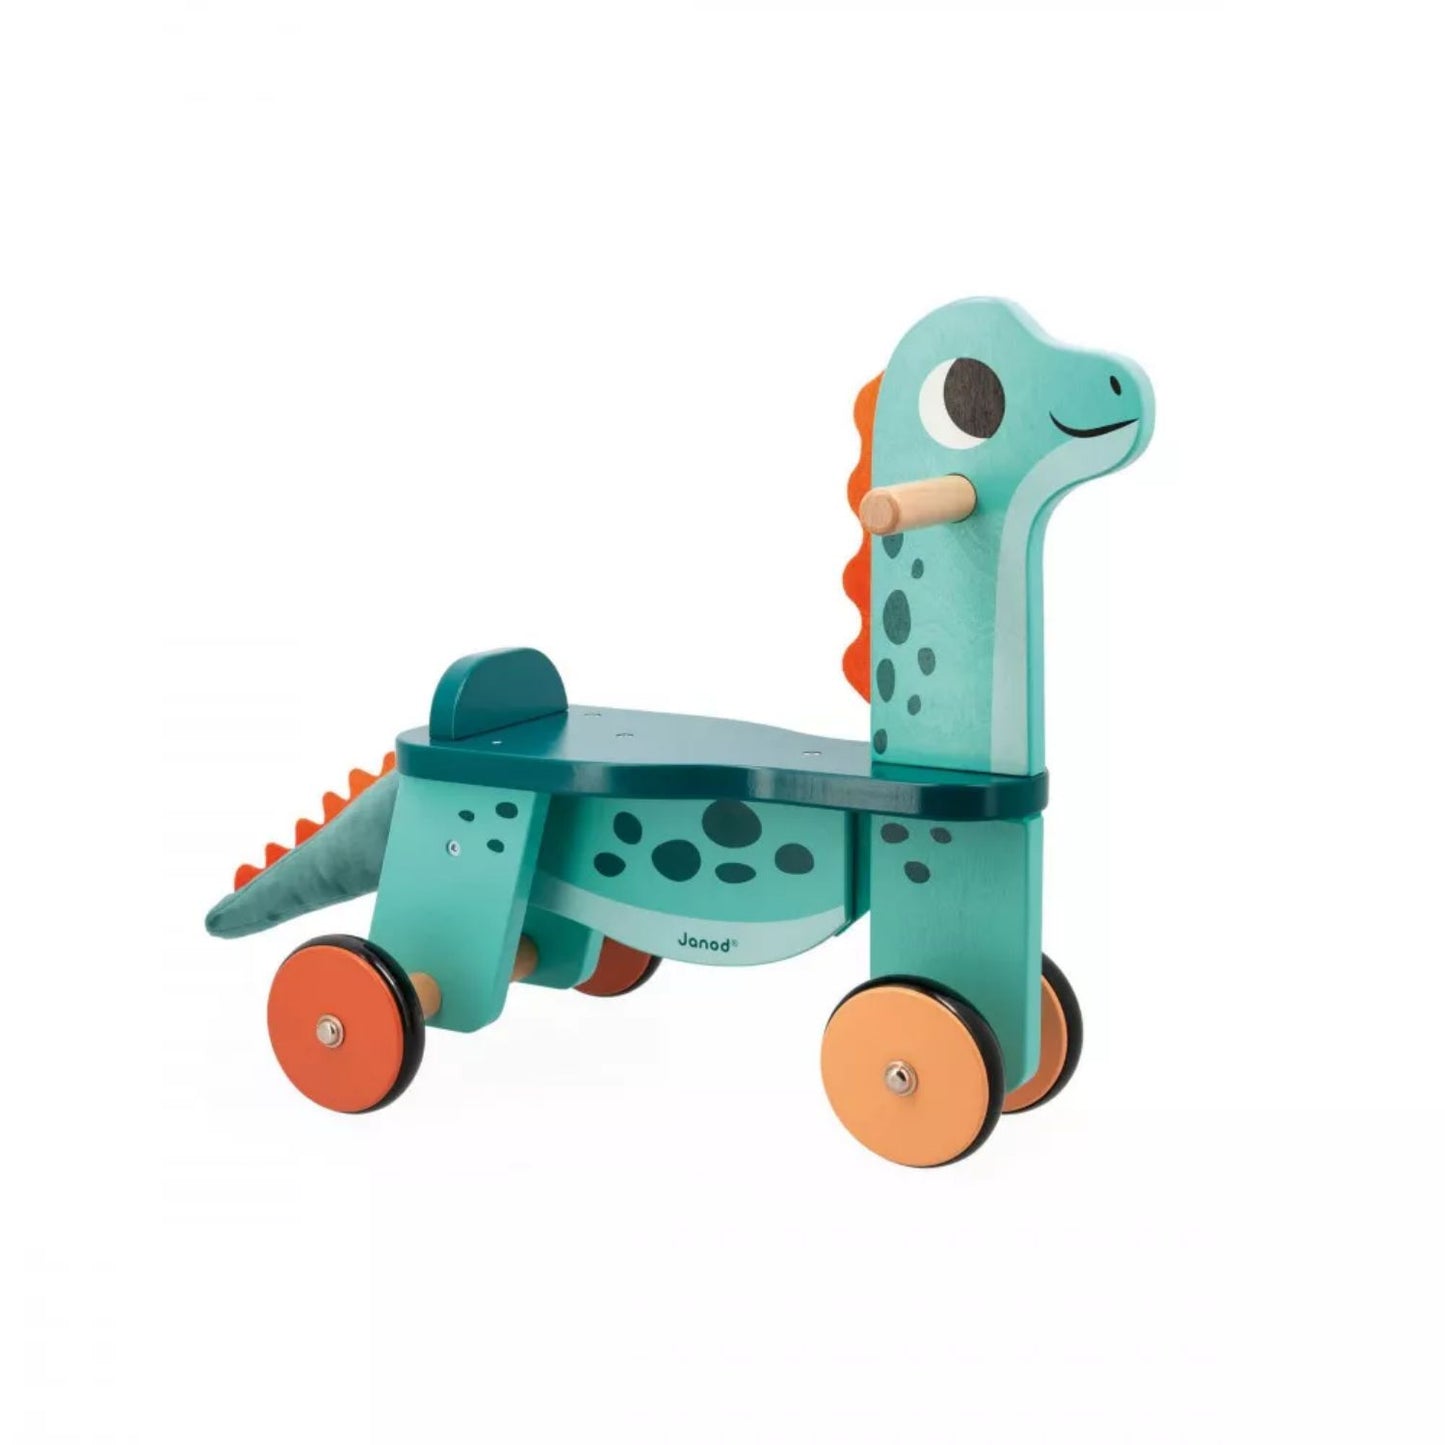 Ride-on Dino Portosaurus | Baby & Toddler Activity Wooden Toy